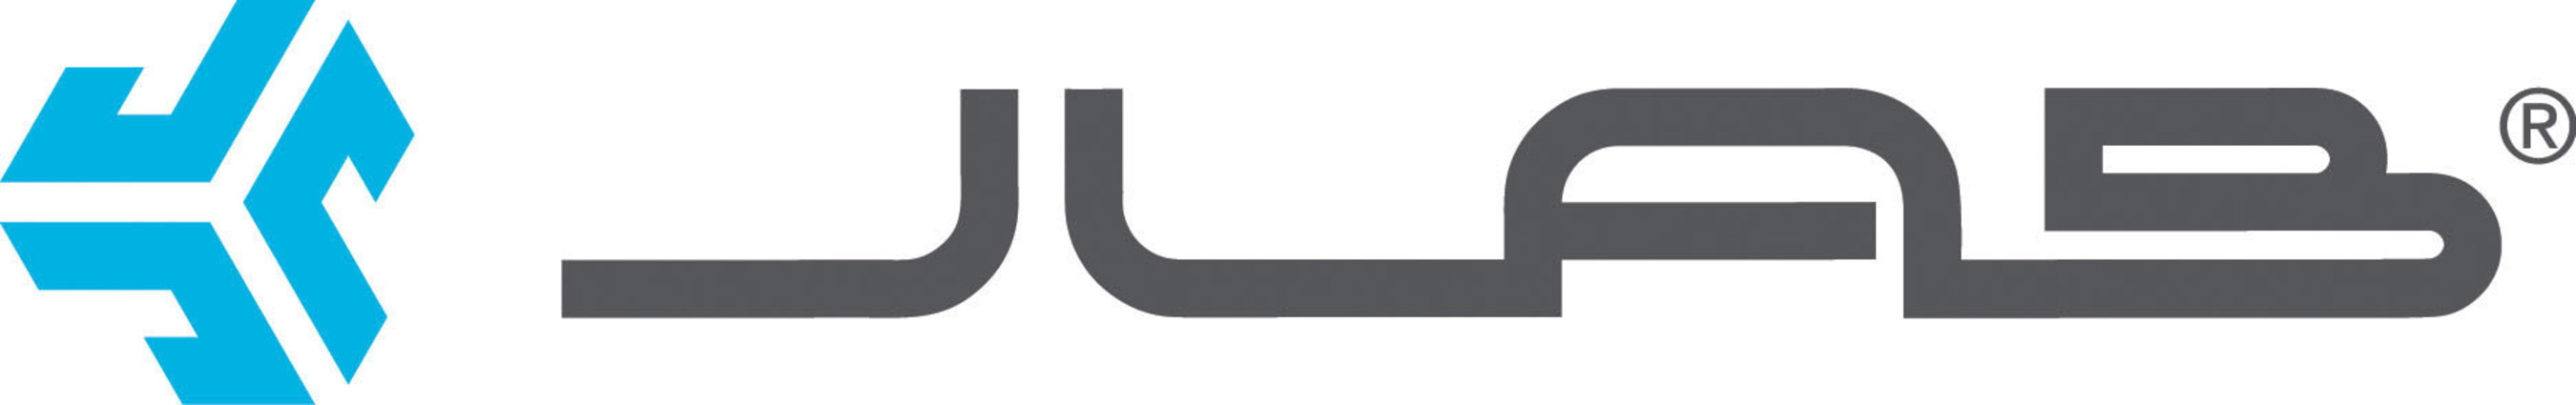 JLab logo